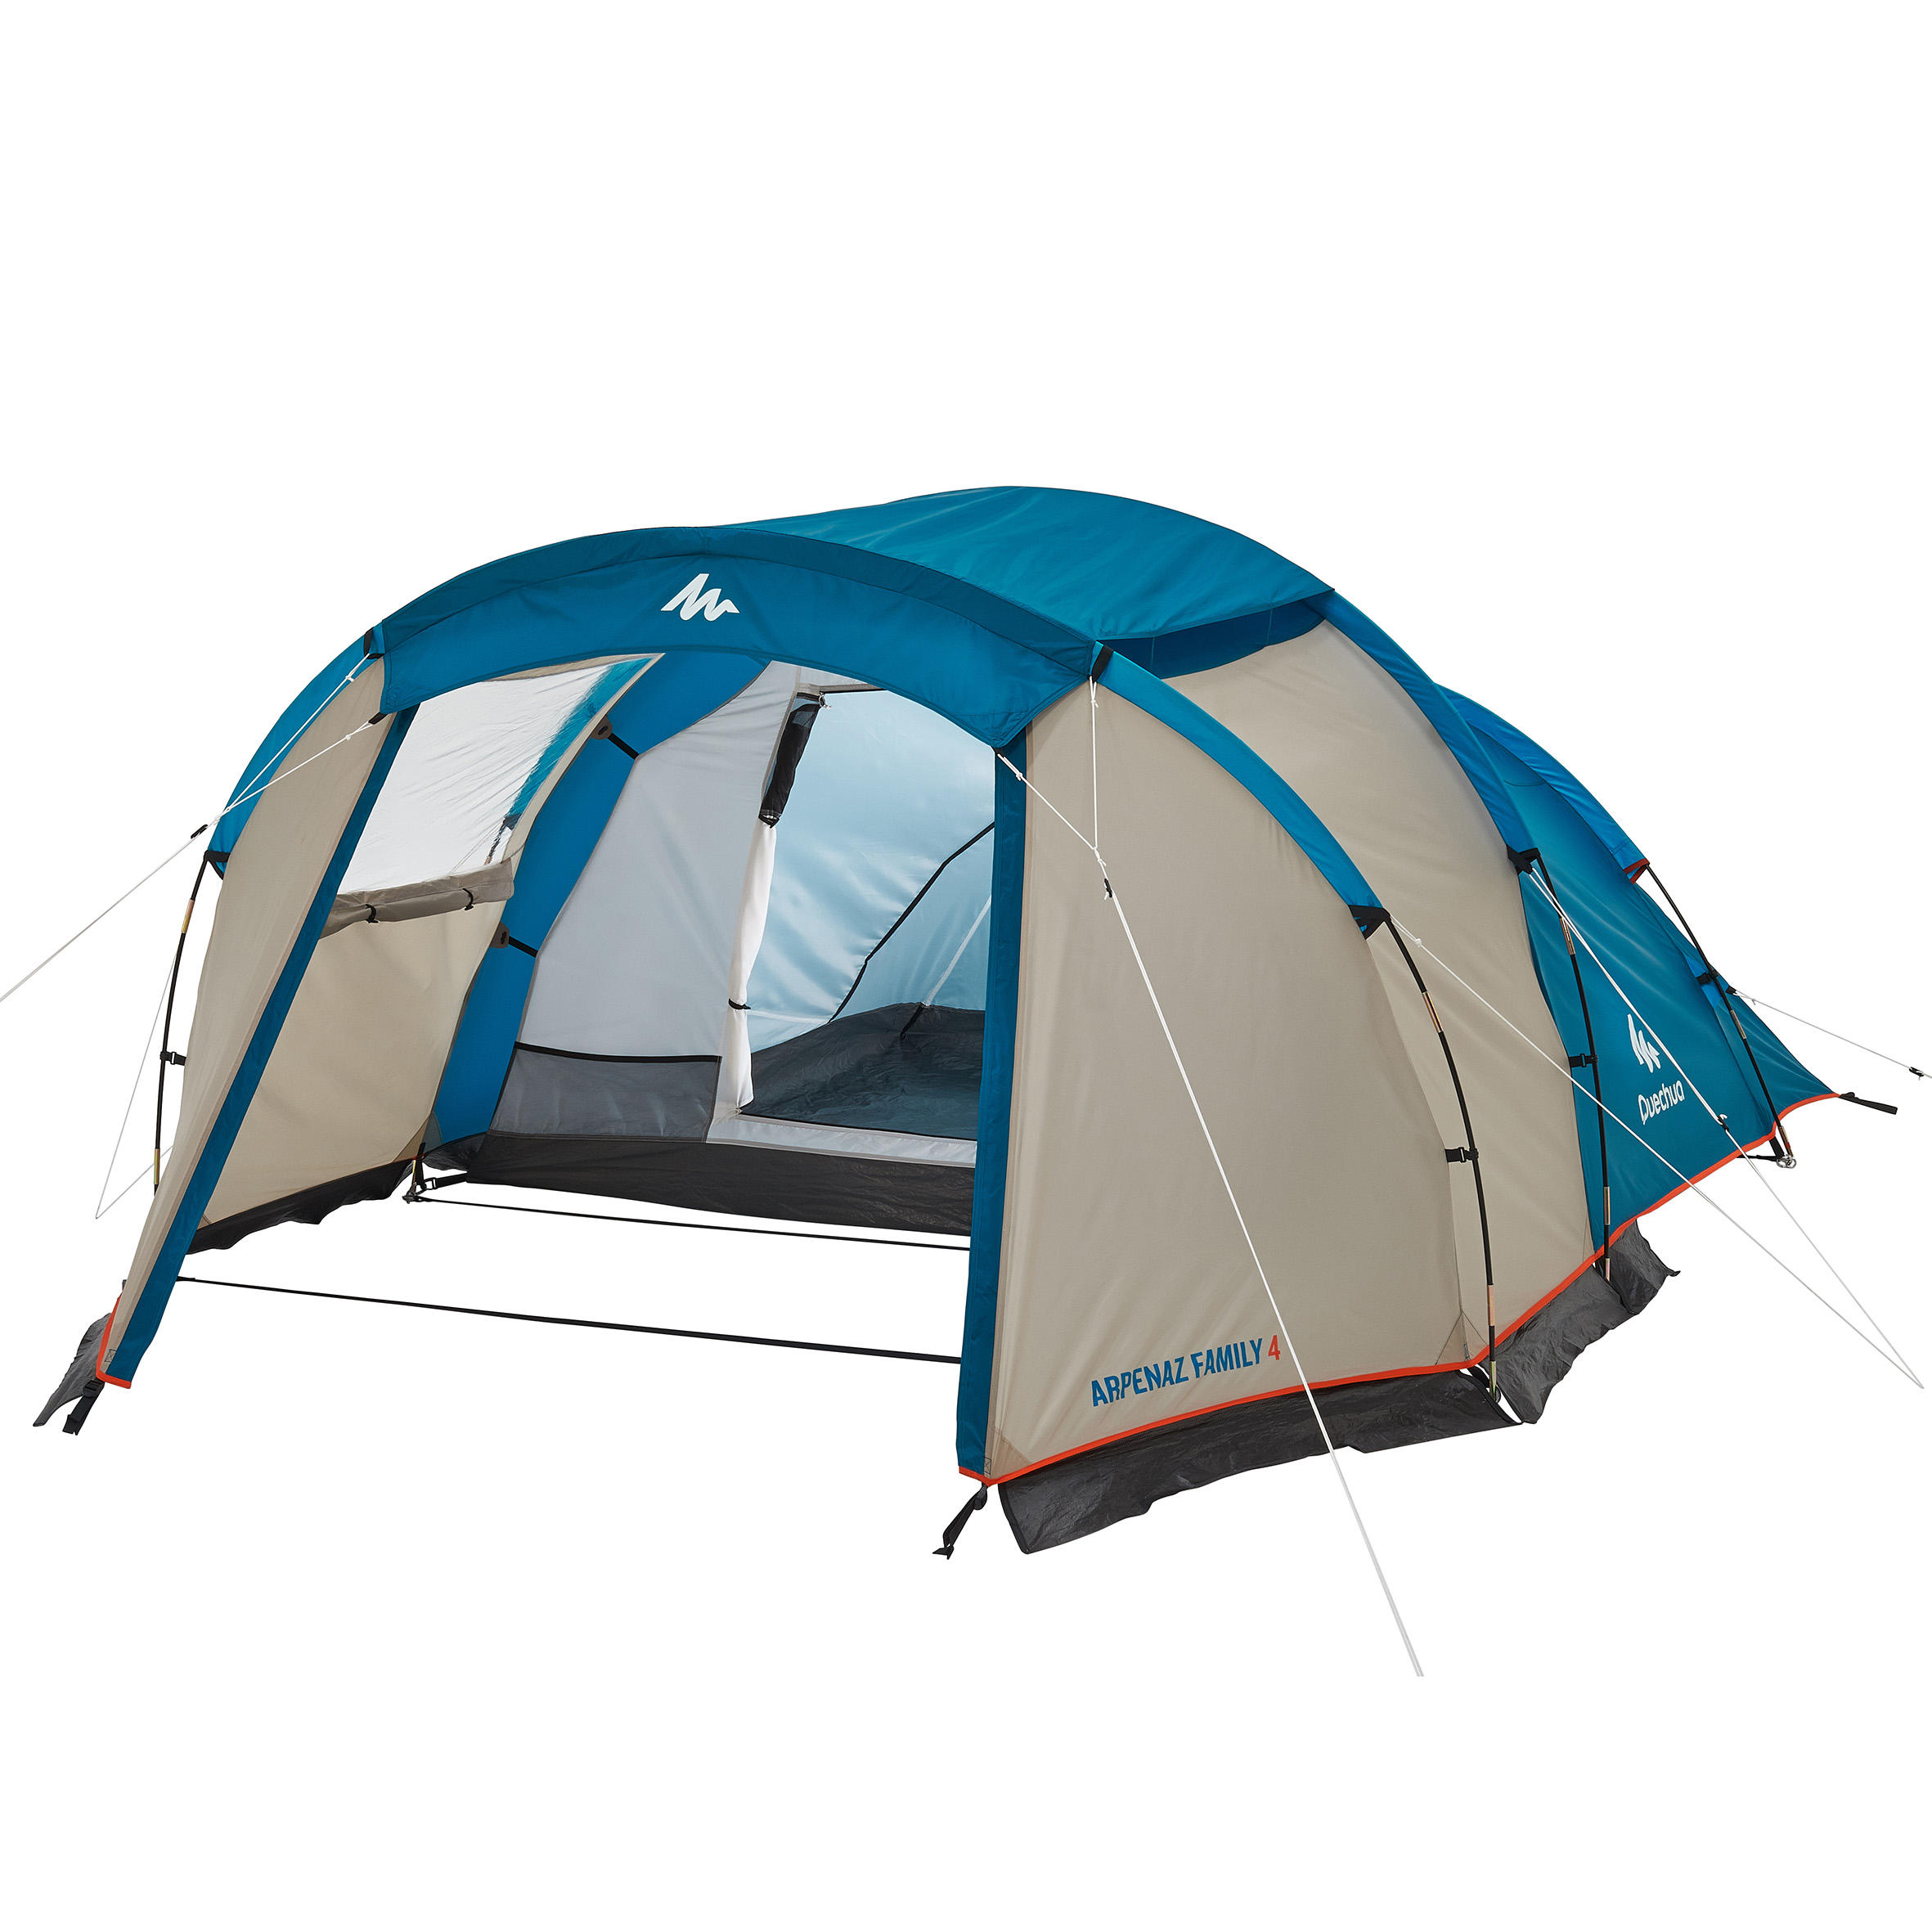 decathlon 4 man tent